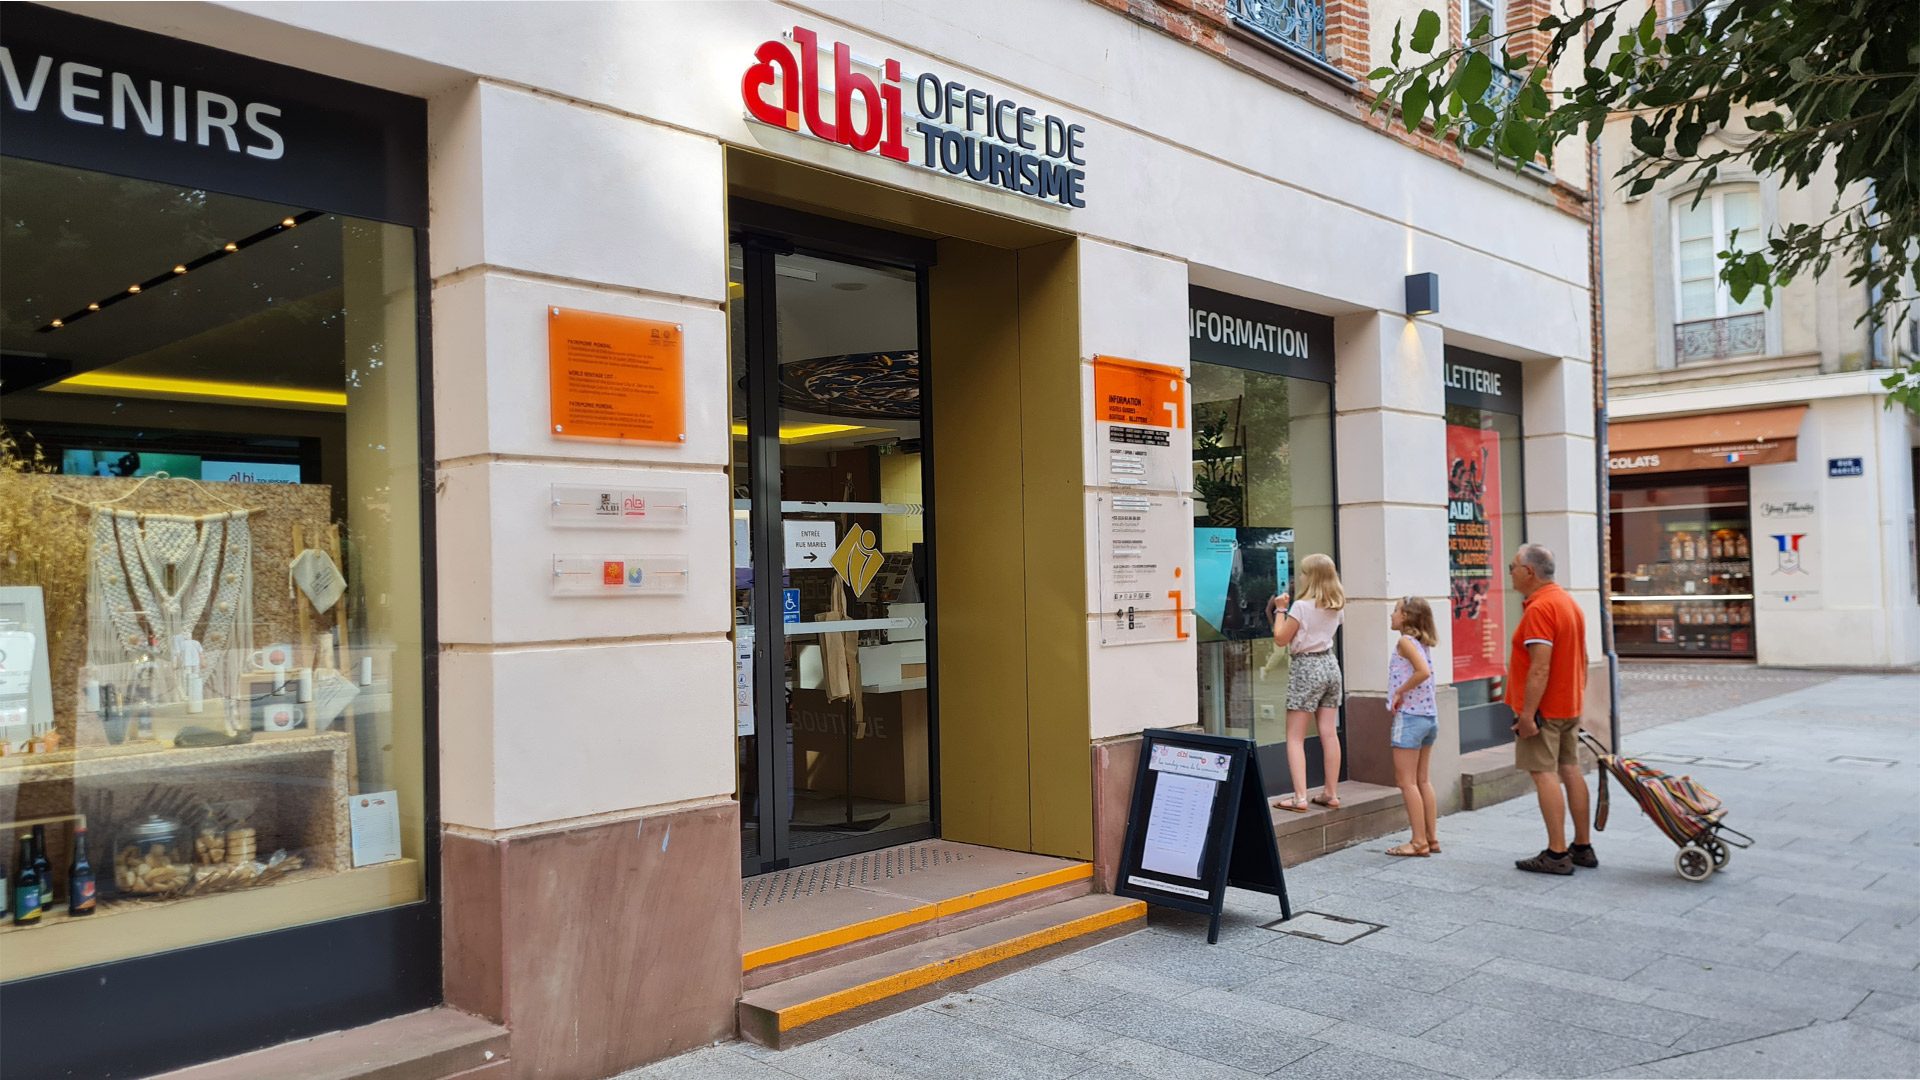 Albi Tourist Office 目的地の専門家: アドバイス、発券、ガイド付きツアー、ショップ